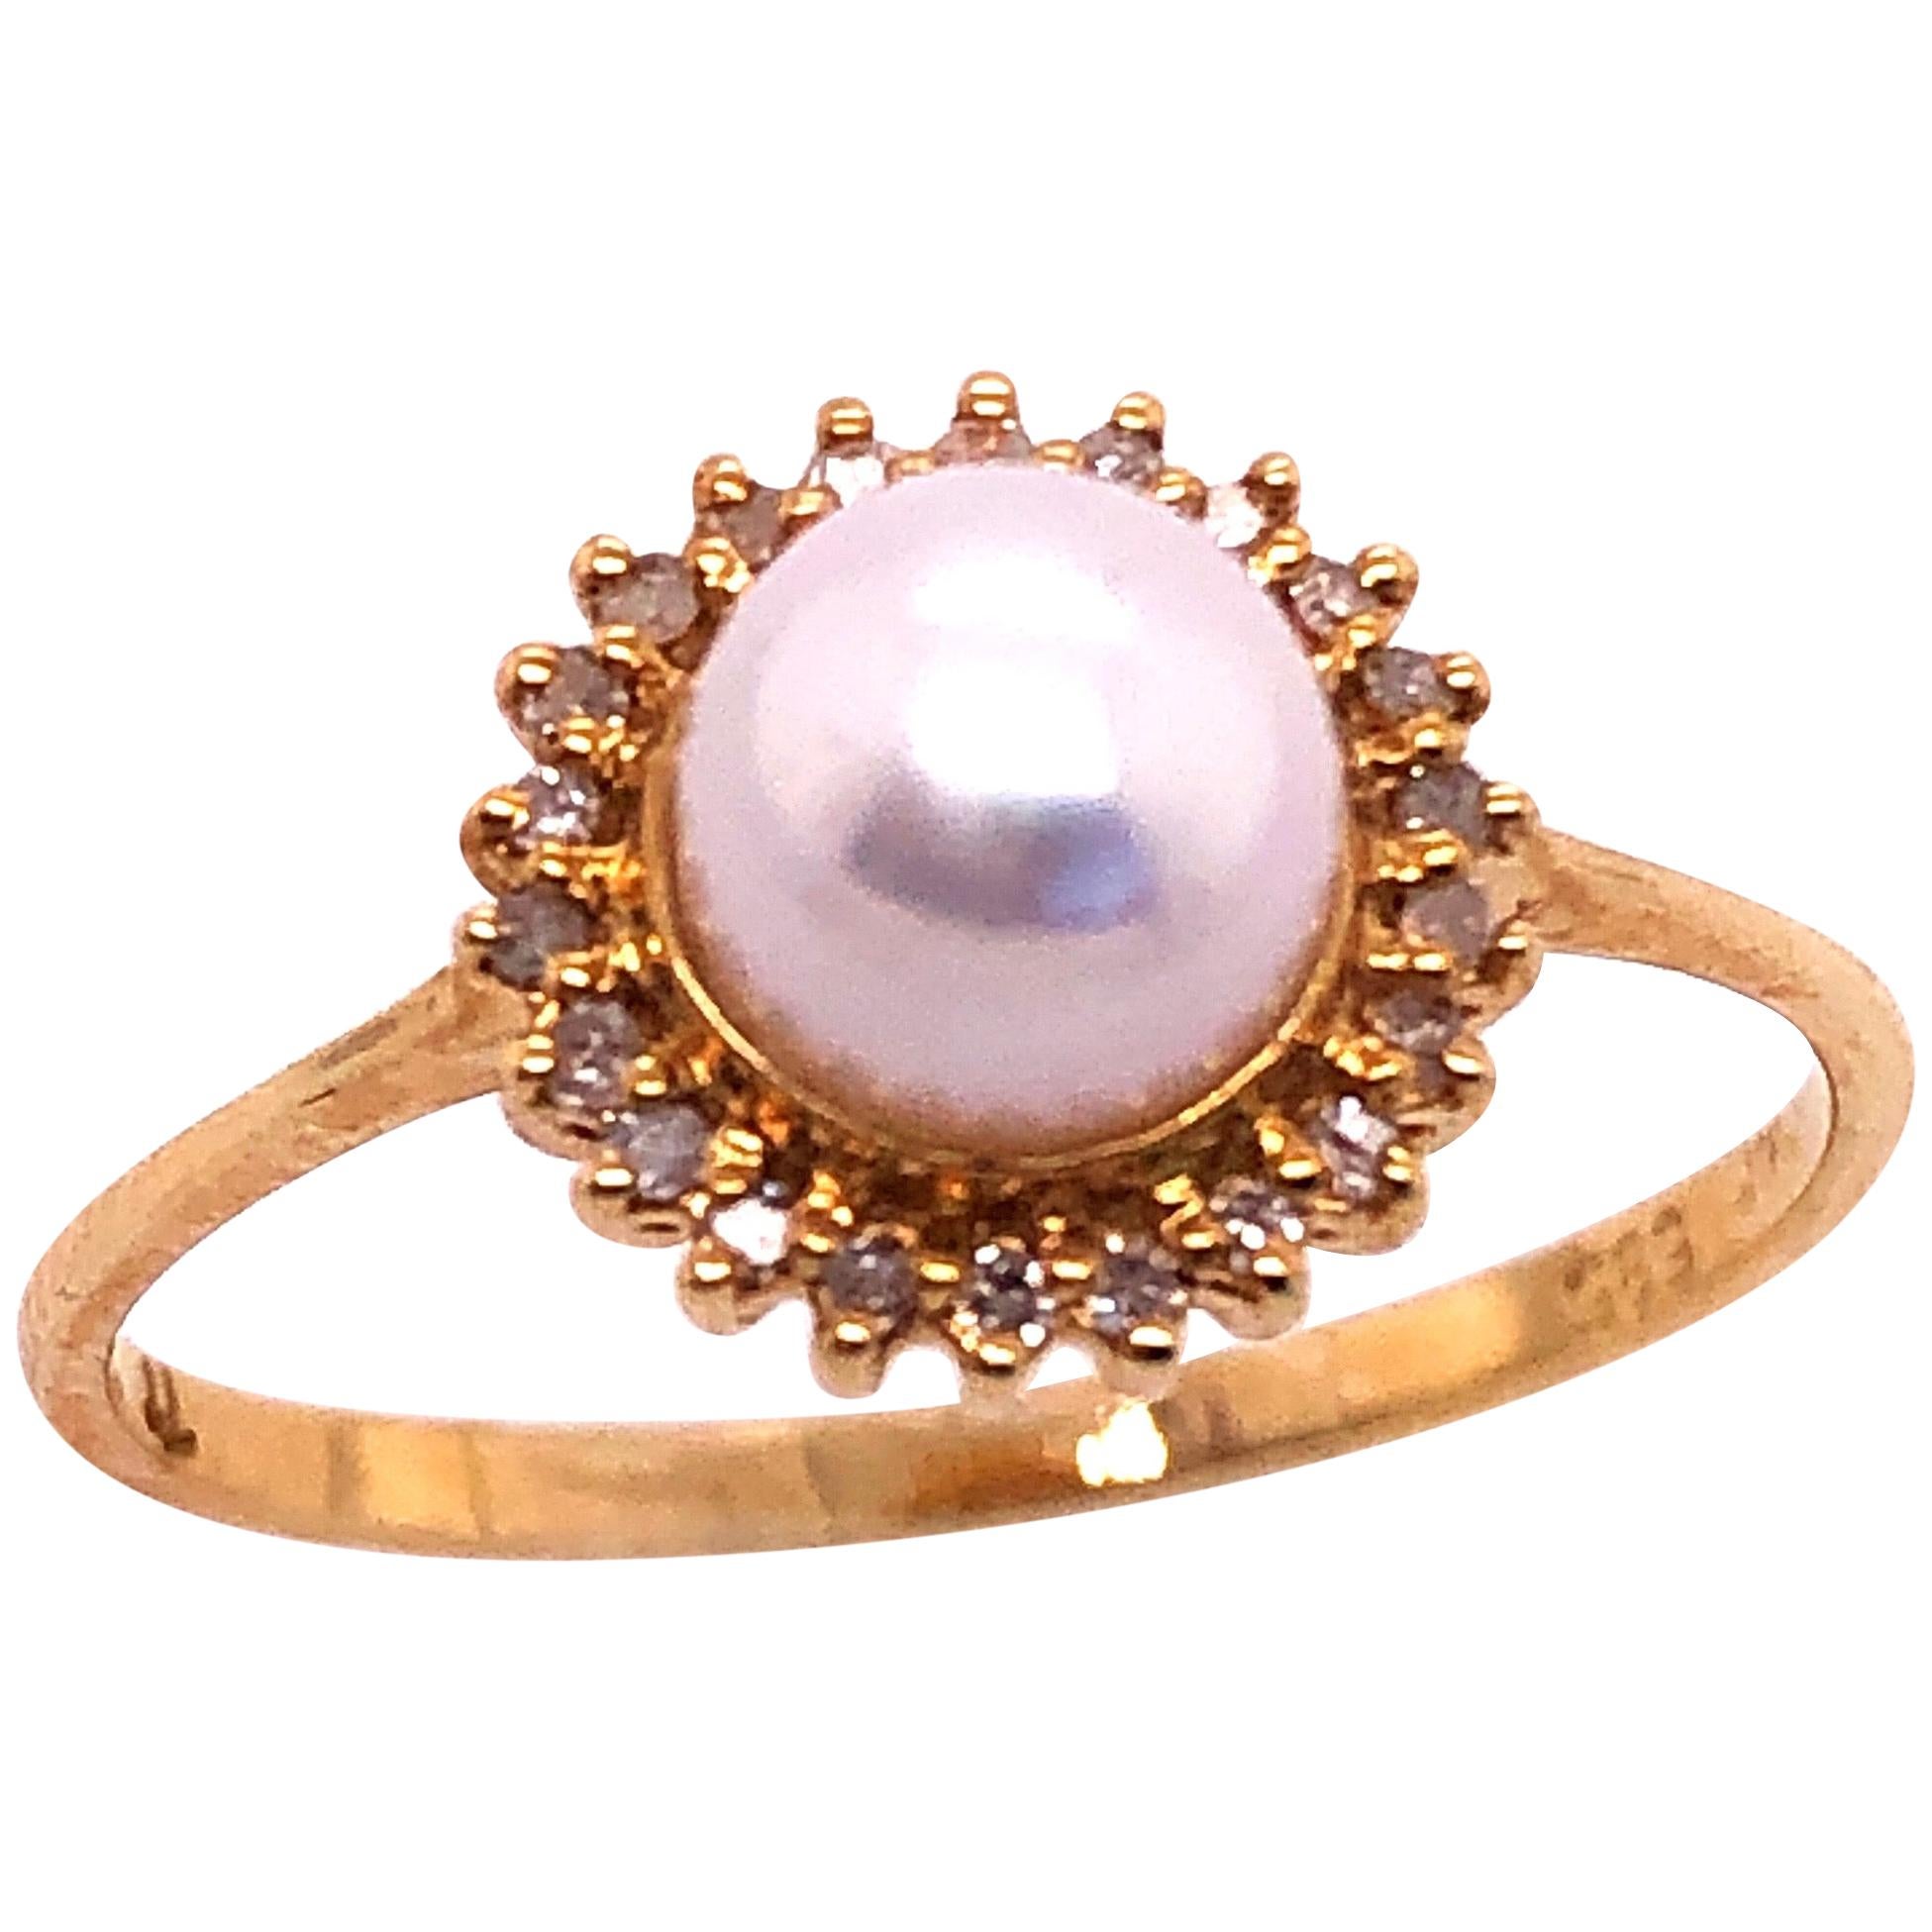 14 Karat Yellow Gold Fashion Pearl Ring with Diamonds